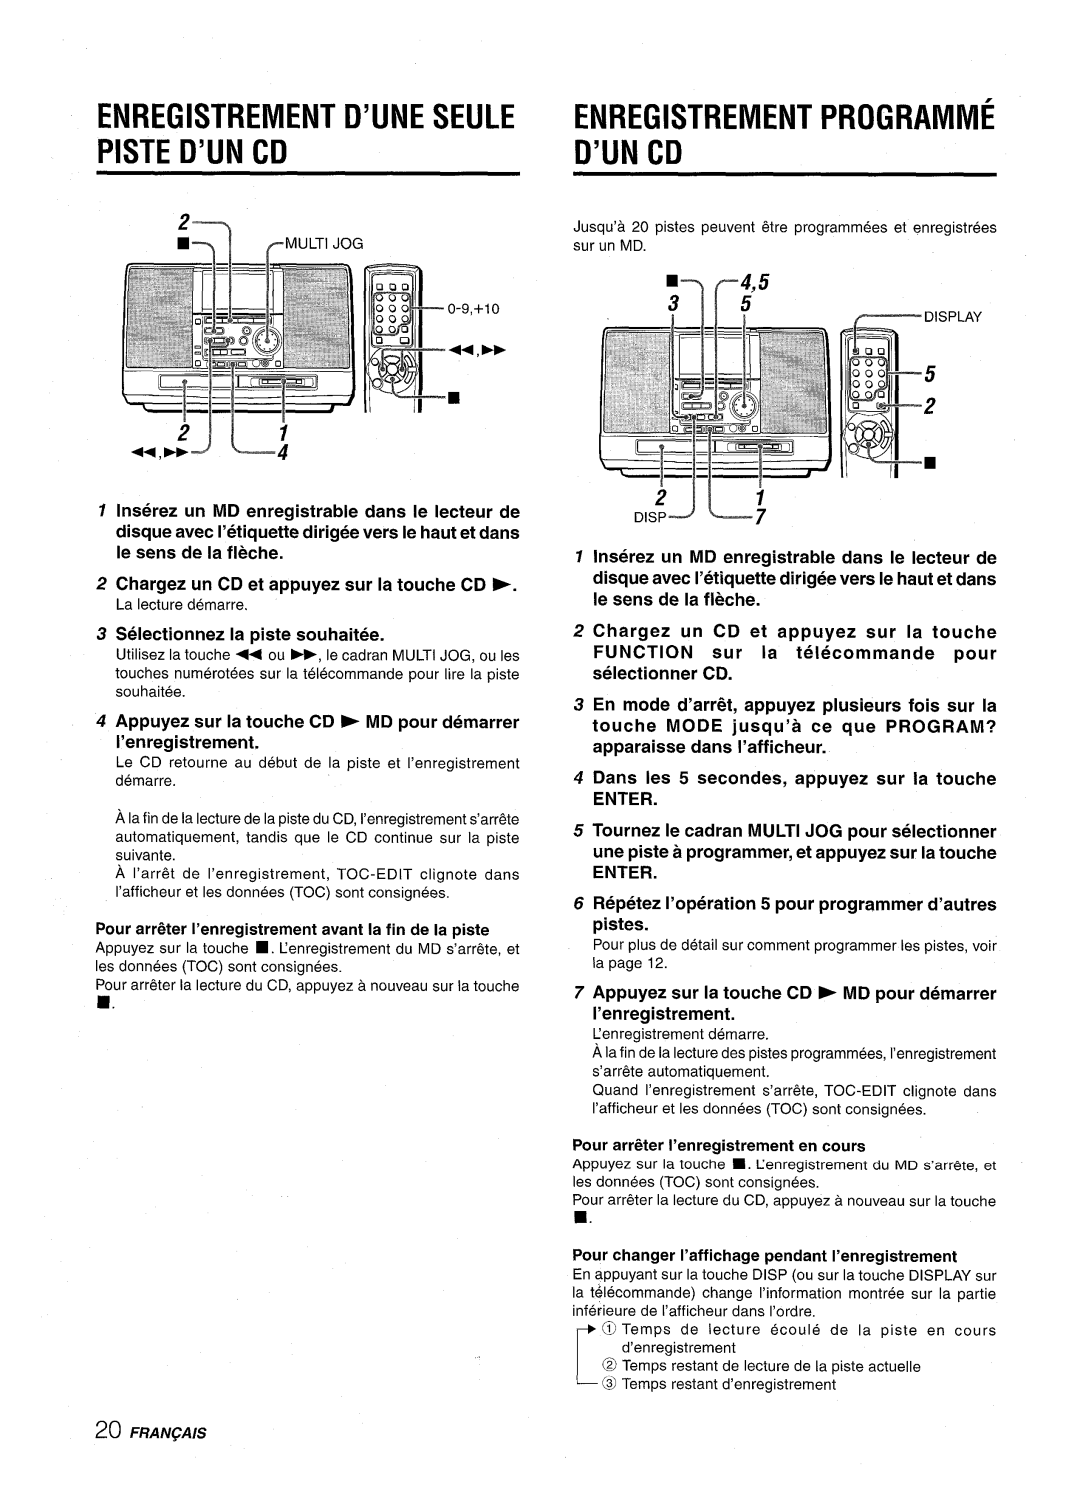 Aiwa CSD-MD50 manual ?-7---$5, Enregistrement D’Une Seule Piste D’Un Cd, Enregistrement Programme D’Un- Cd, Zj L, a L @ 0 L 